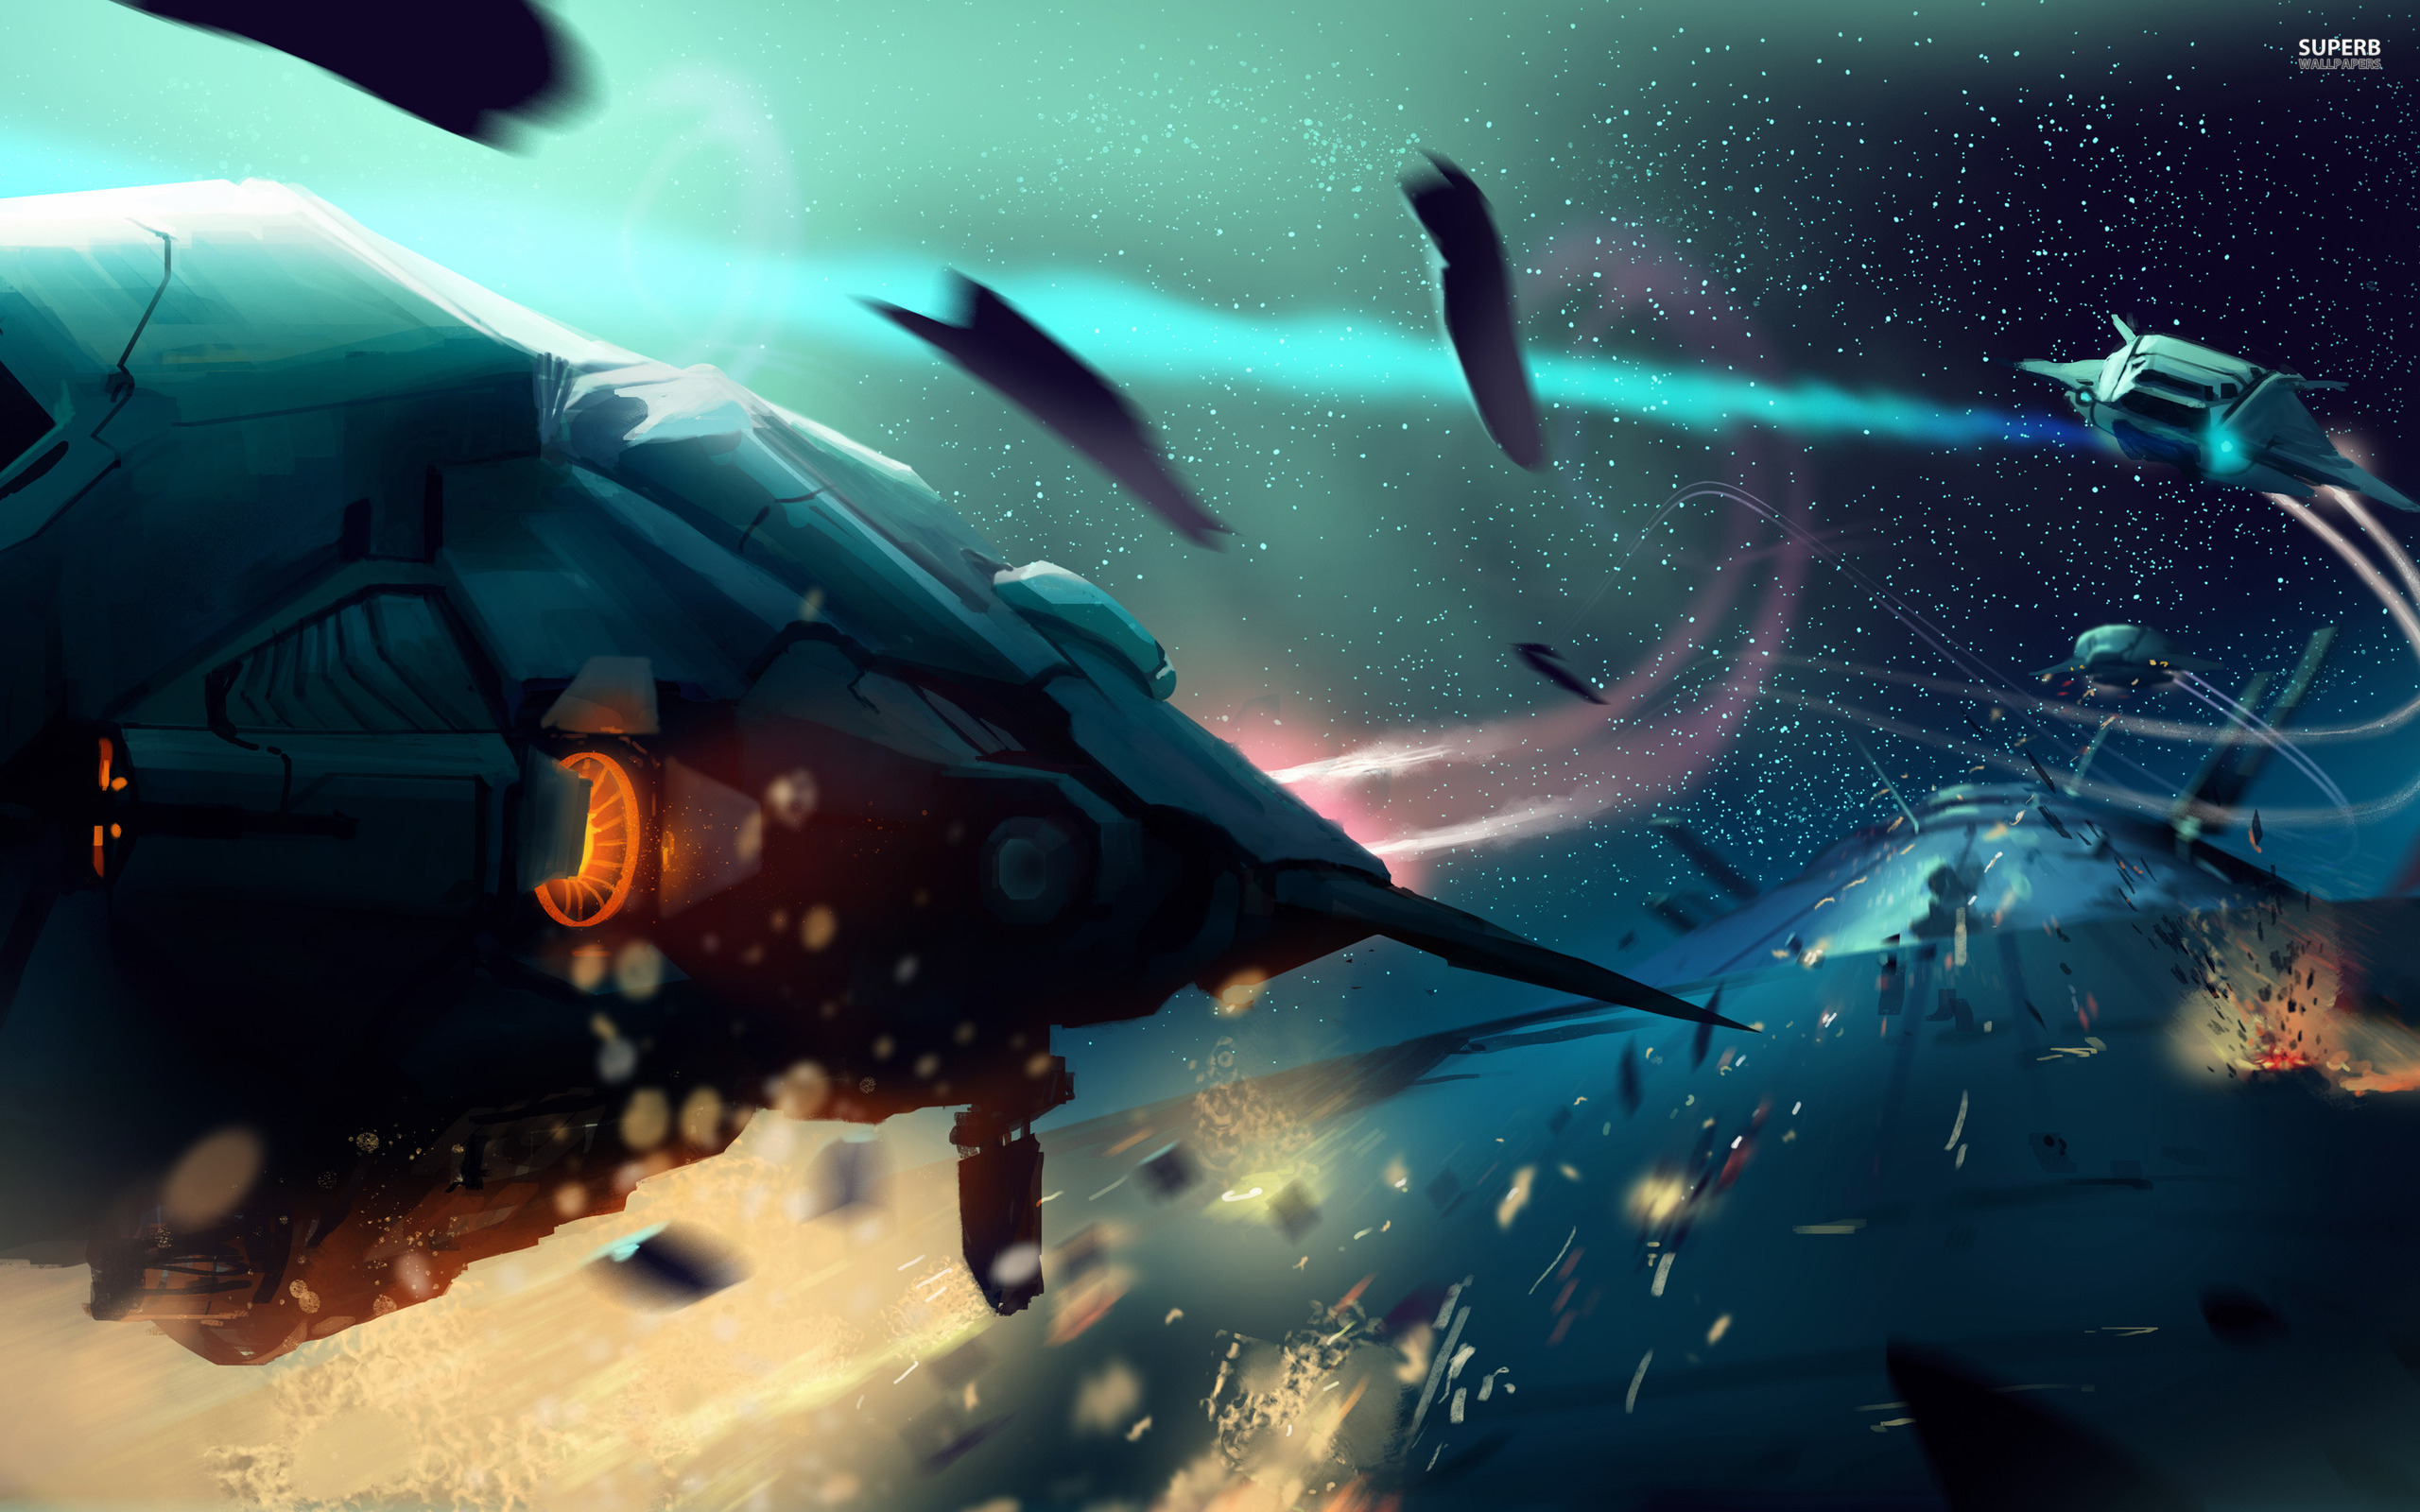 ELITE DANGEROUS sci fi spaceship game e wallpaper background